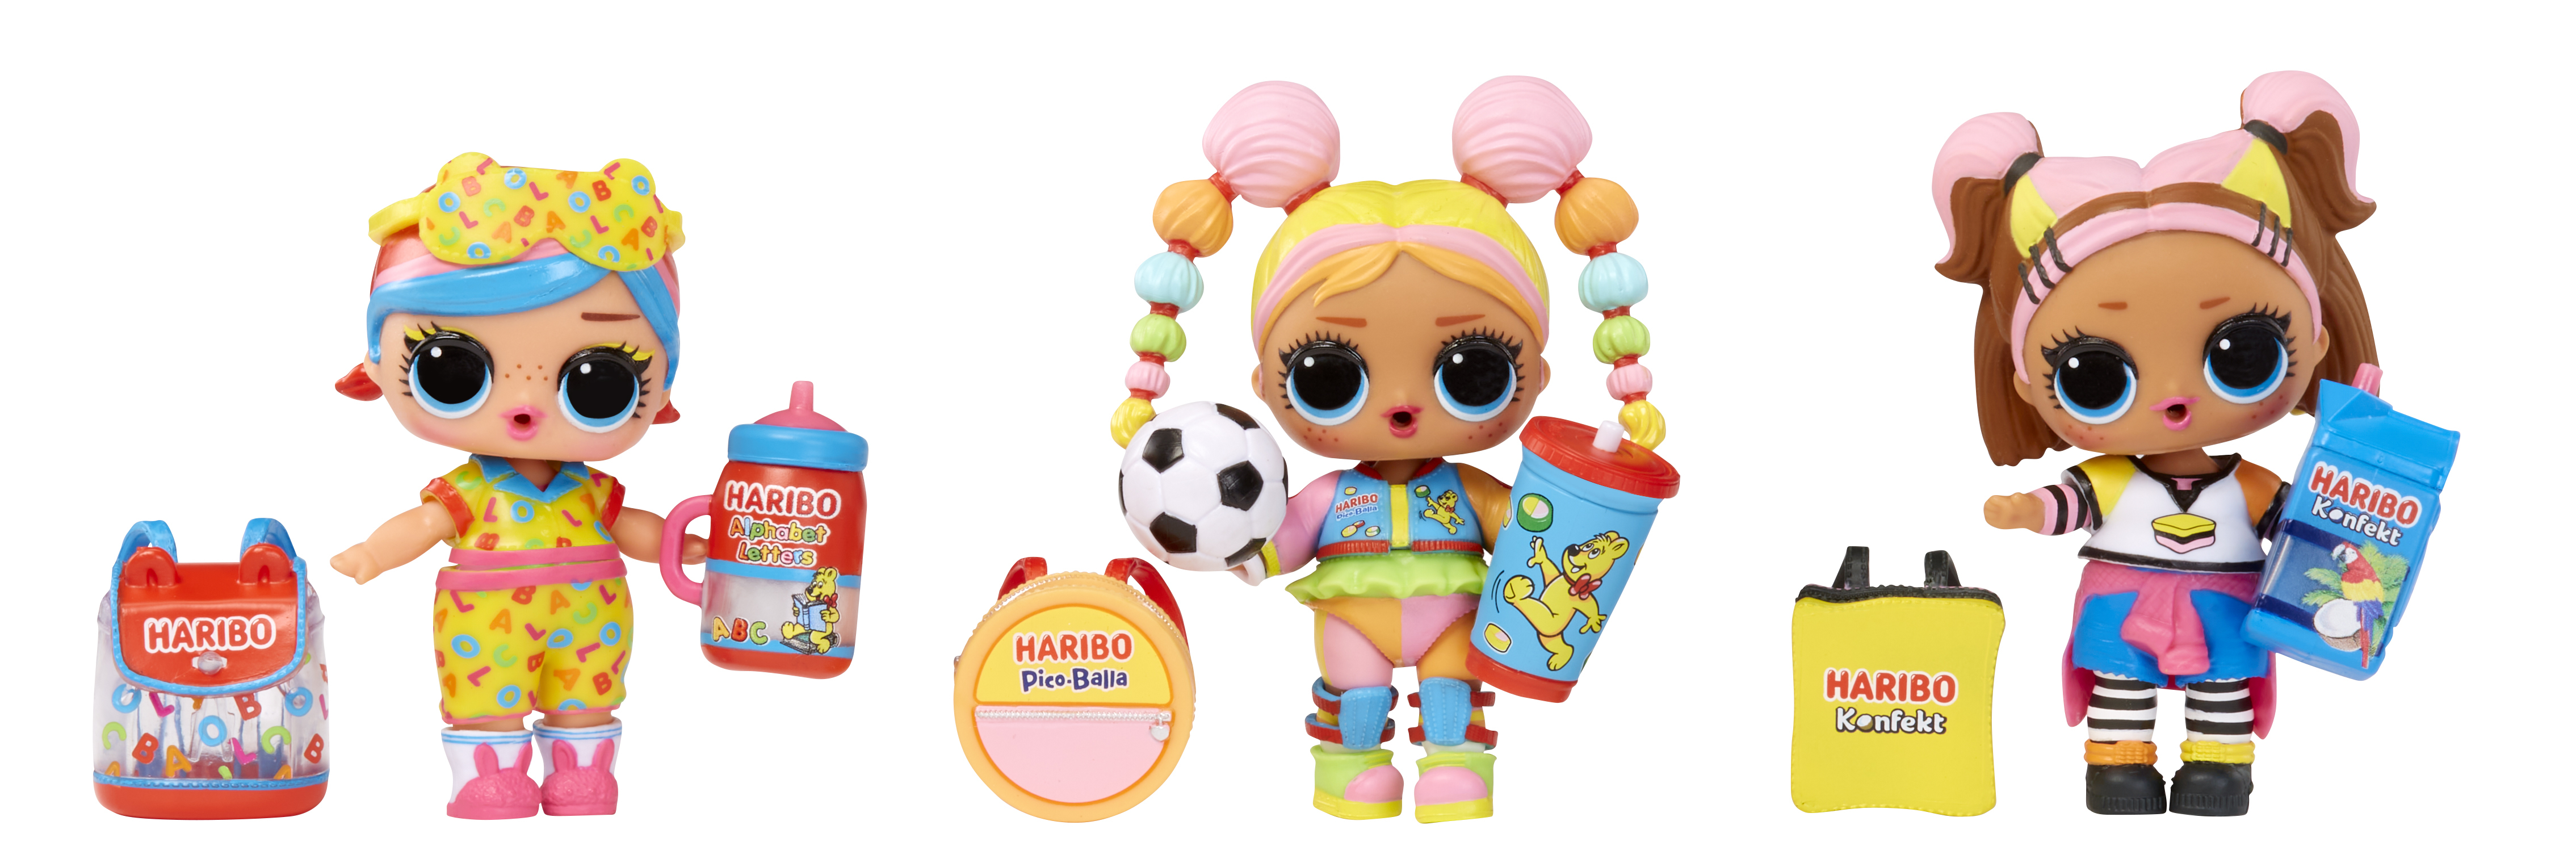 LOL Surprise Doll Haribo Mini Sweets MISS PICO Brand New Same Day Post